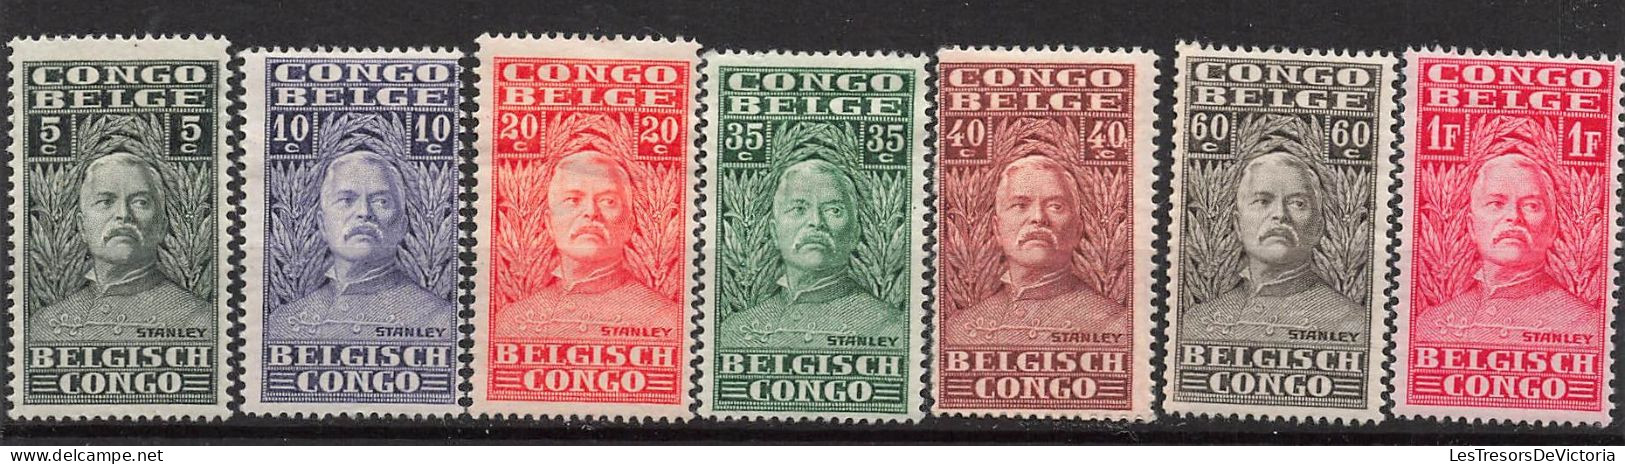 Timbre - Congo Belge - 1928 - COB135/49* - Explorateur Henri Morton Stanley - Cote 50 - Ongebruikt